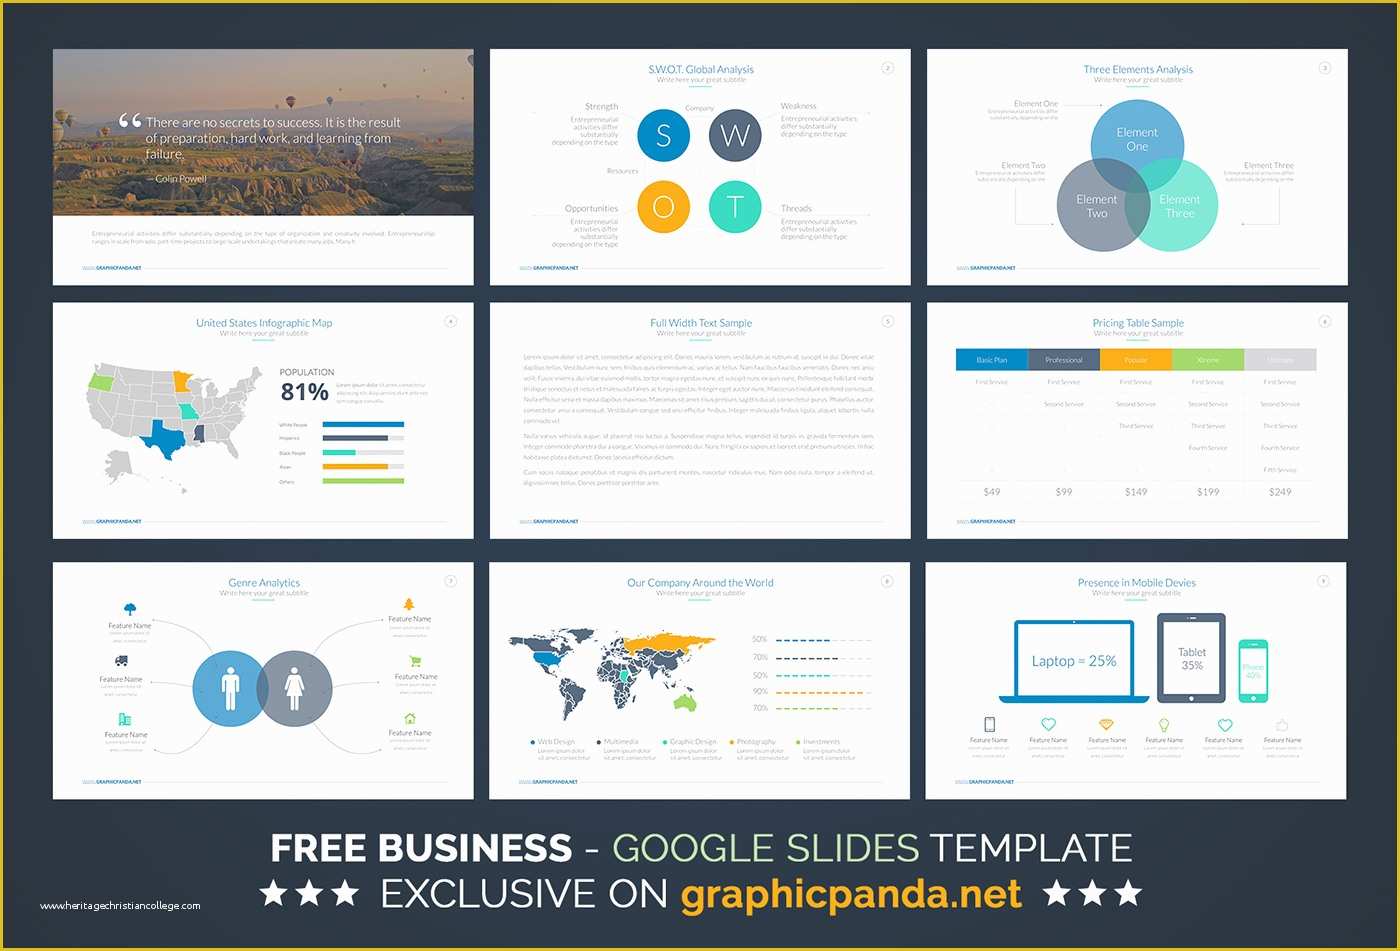 Free Google Slides Templates Of Free Business Plan Google Slides Template On Behance